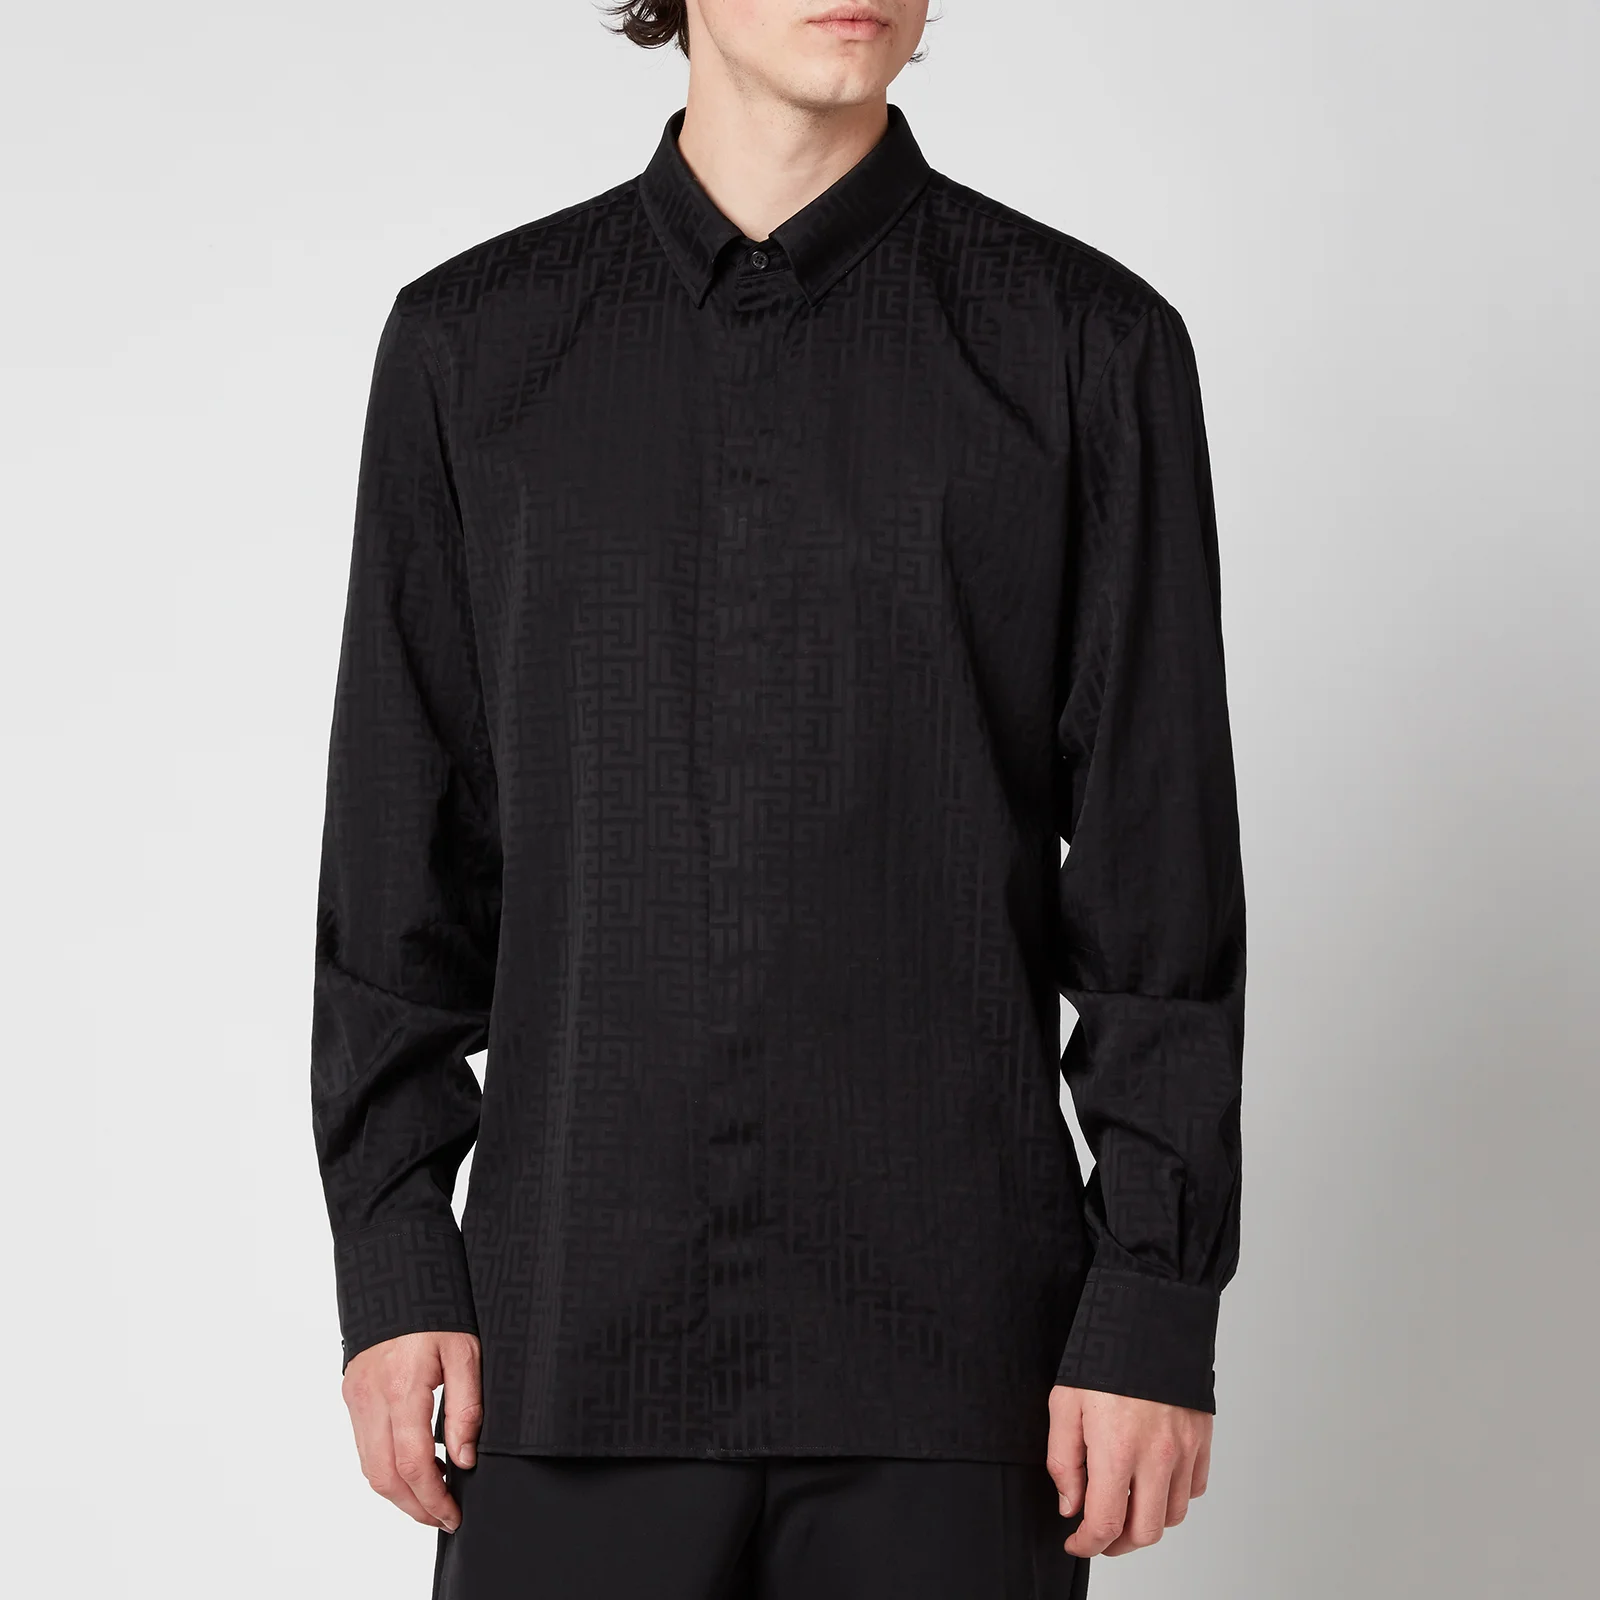 Balmain Men's Tailored Fit Monogram Shirt - Black Image 1